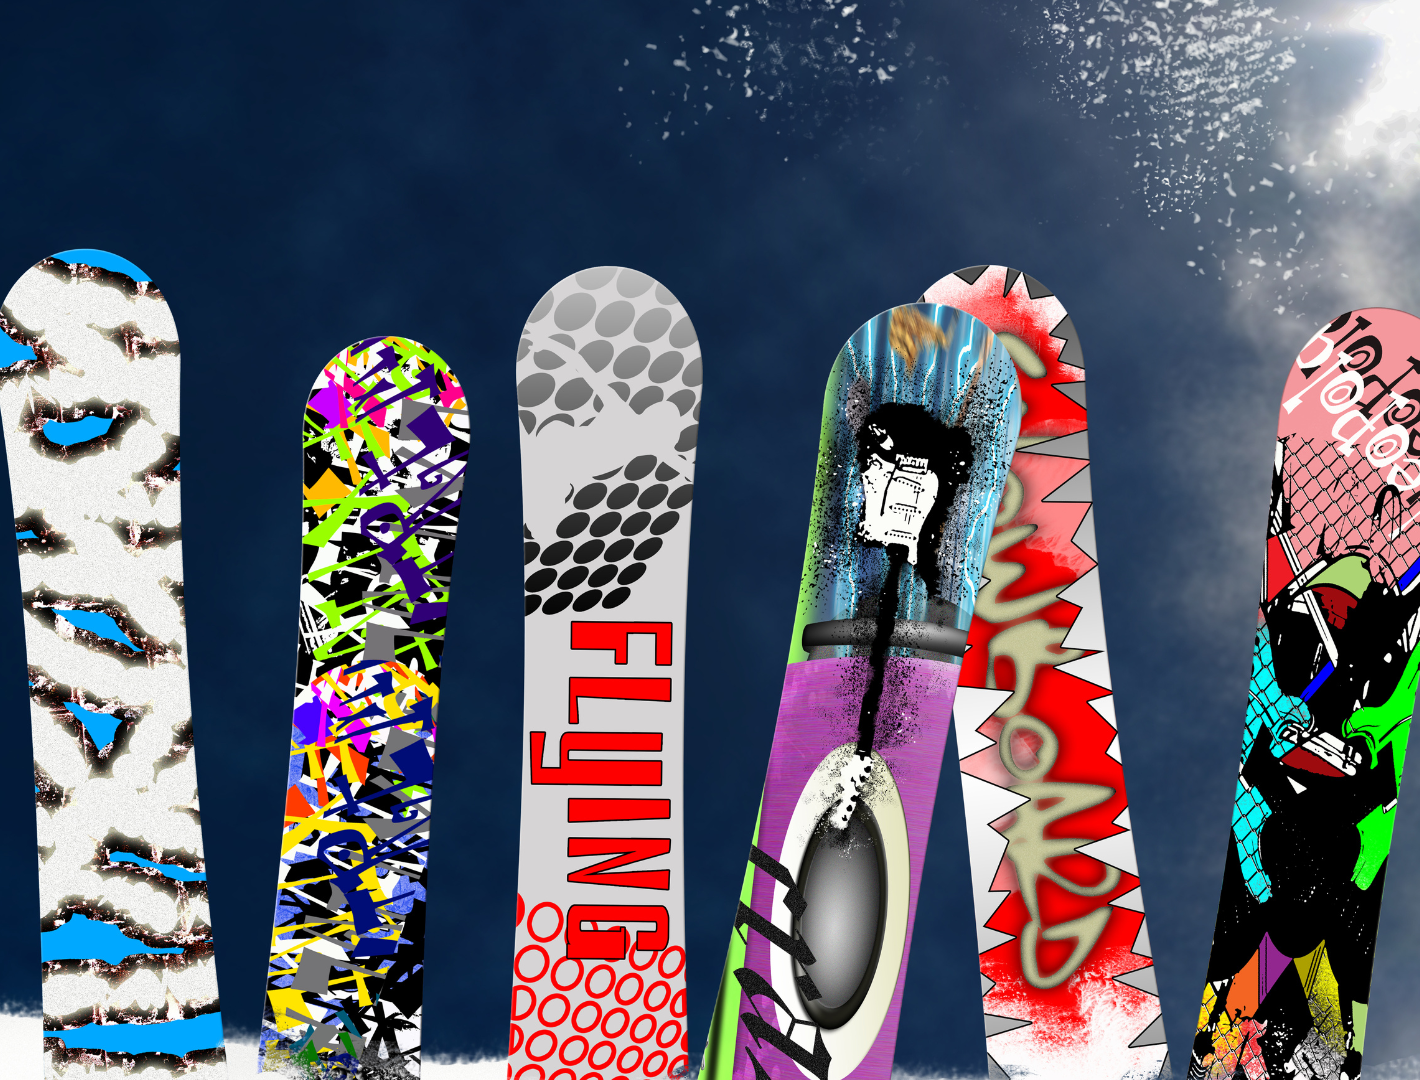 Spider, araignée, Housse pour Casque de ski/snowboard, patin glace rigolo,  neige, alpin, planche a neige, Ski, snowboard…